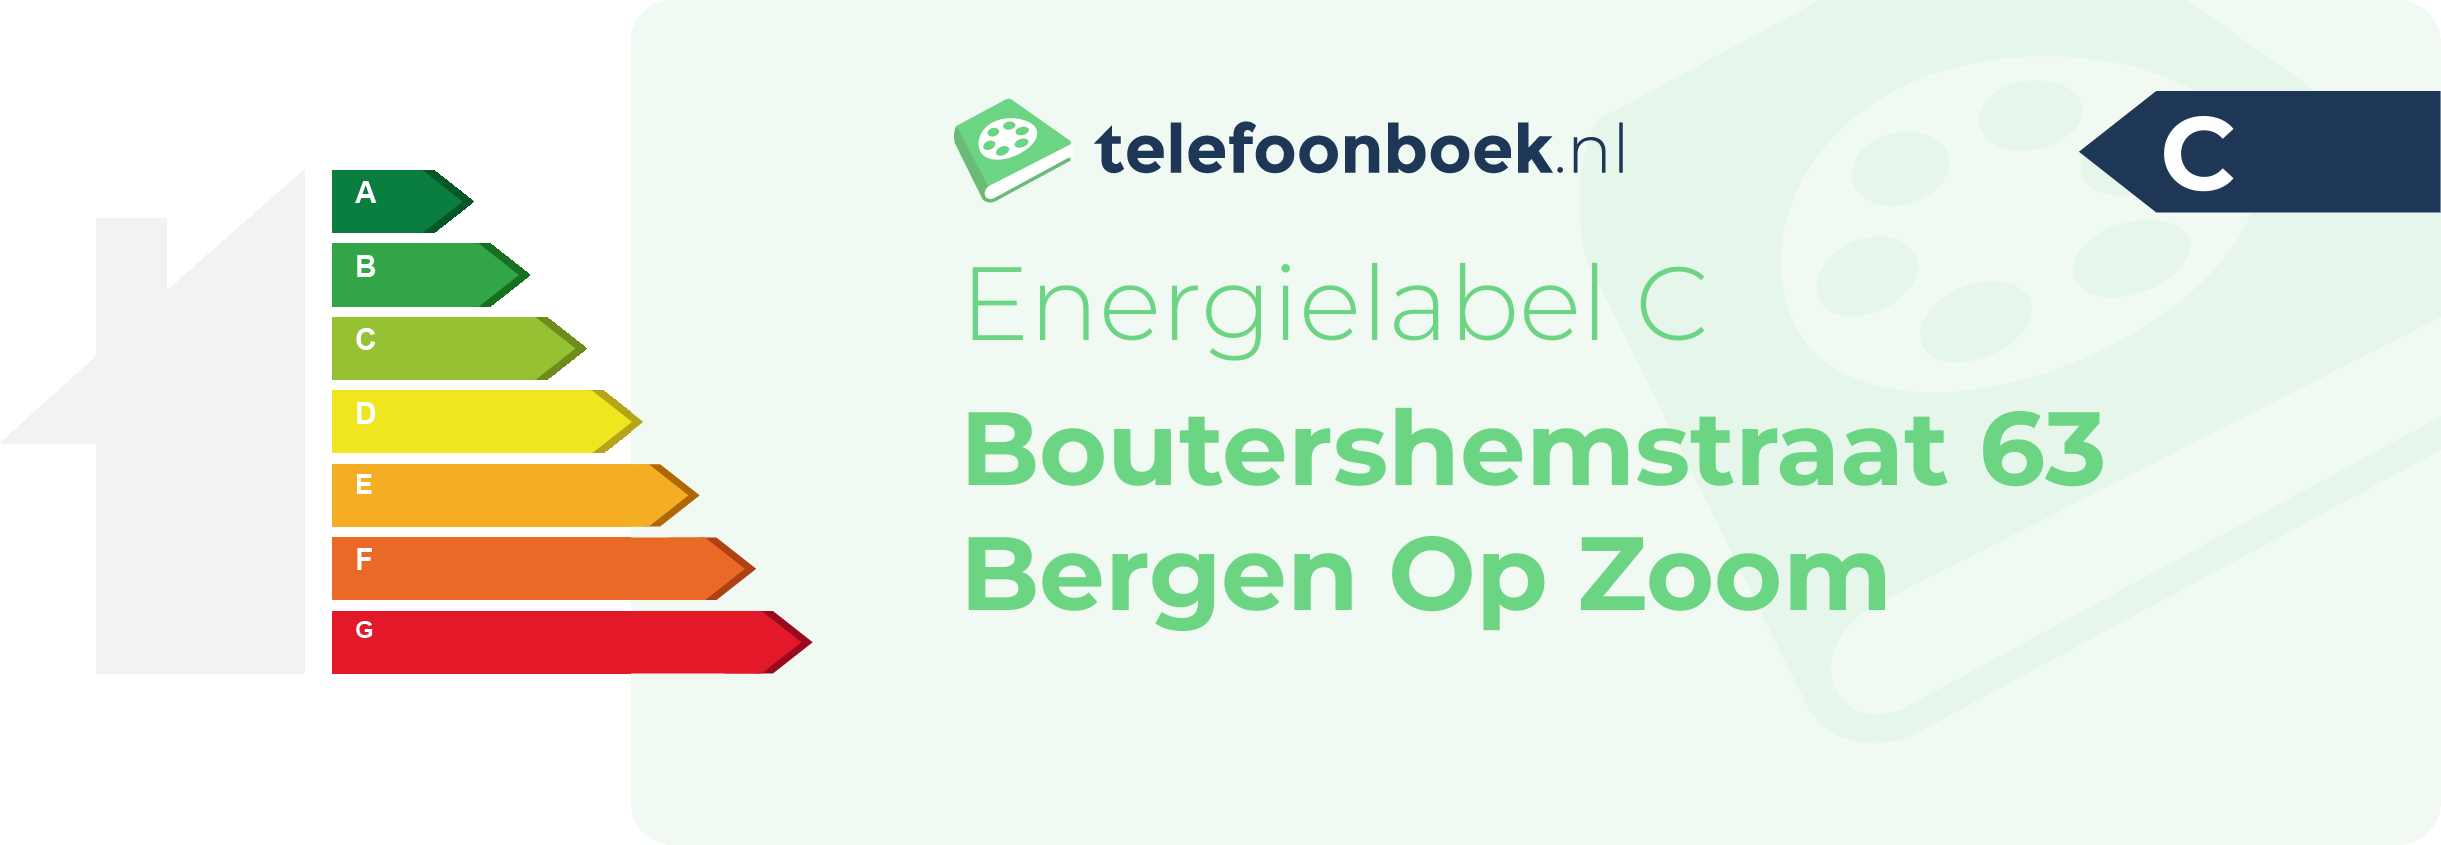 Energielabel Boutershemstraat 63 Bergen Op Zoom